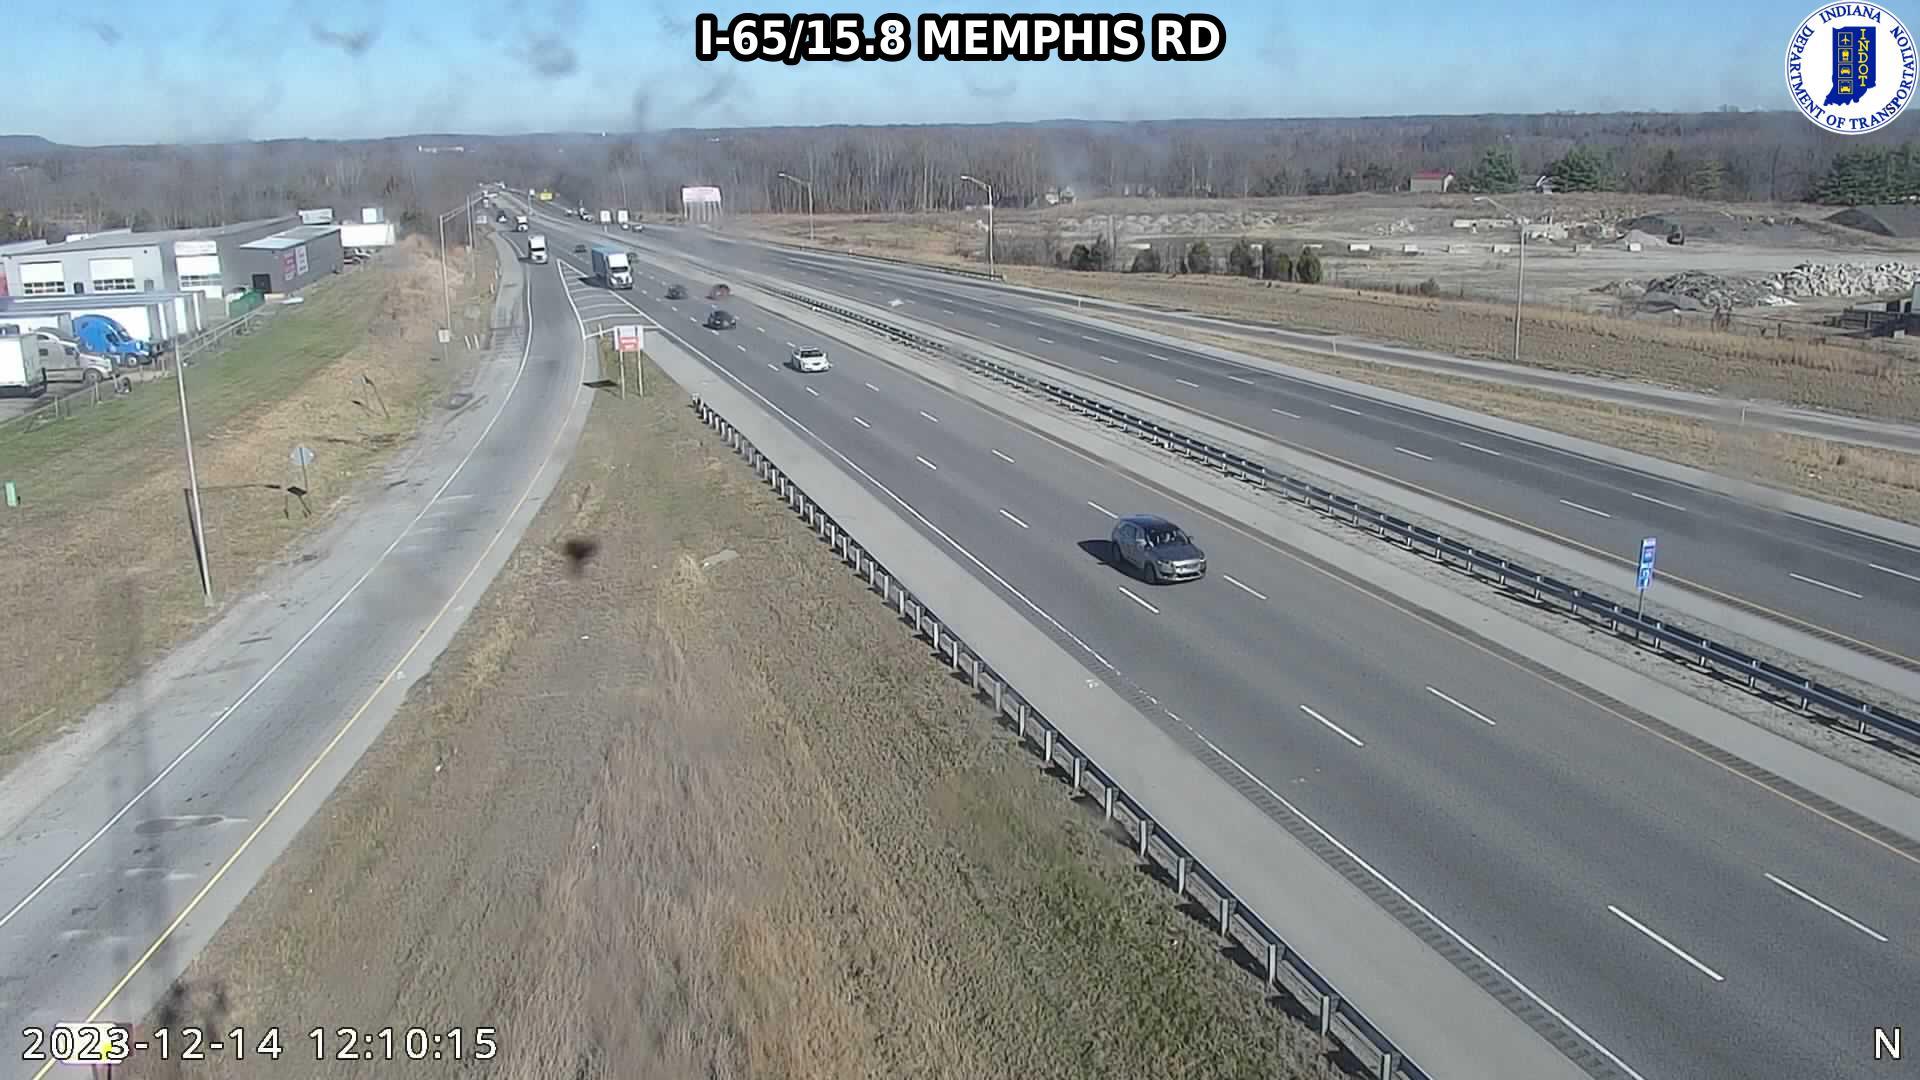 Traffic Cam Memphis: I-65: I-65/15.8 - RD : I-65/15.8 - RD